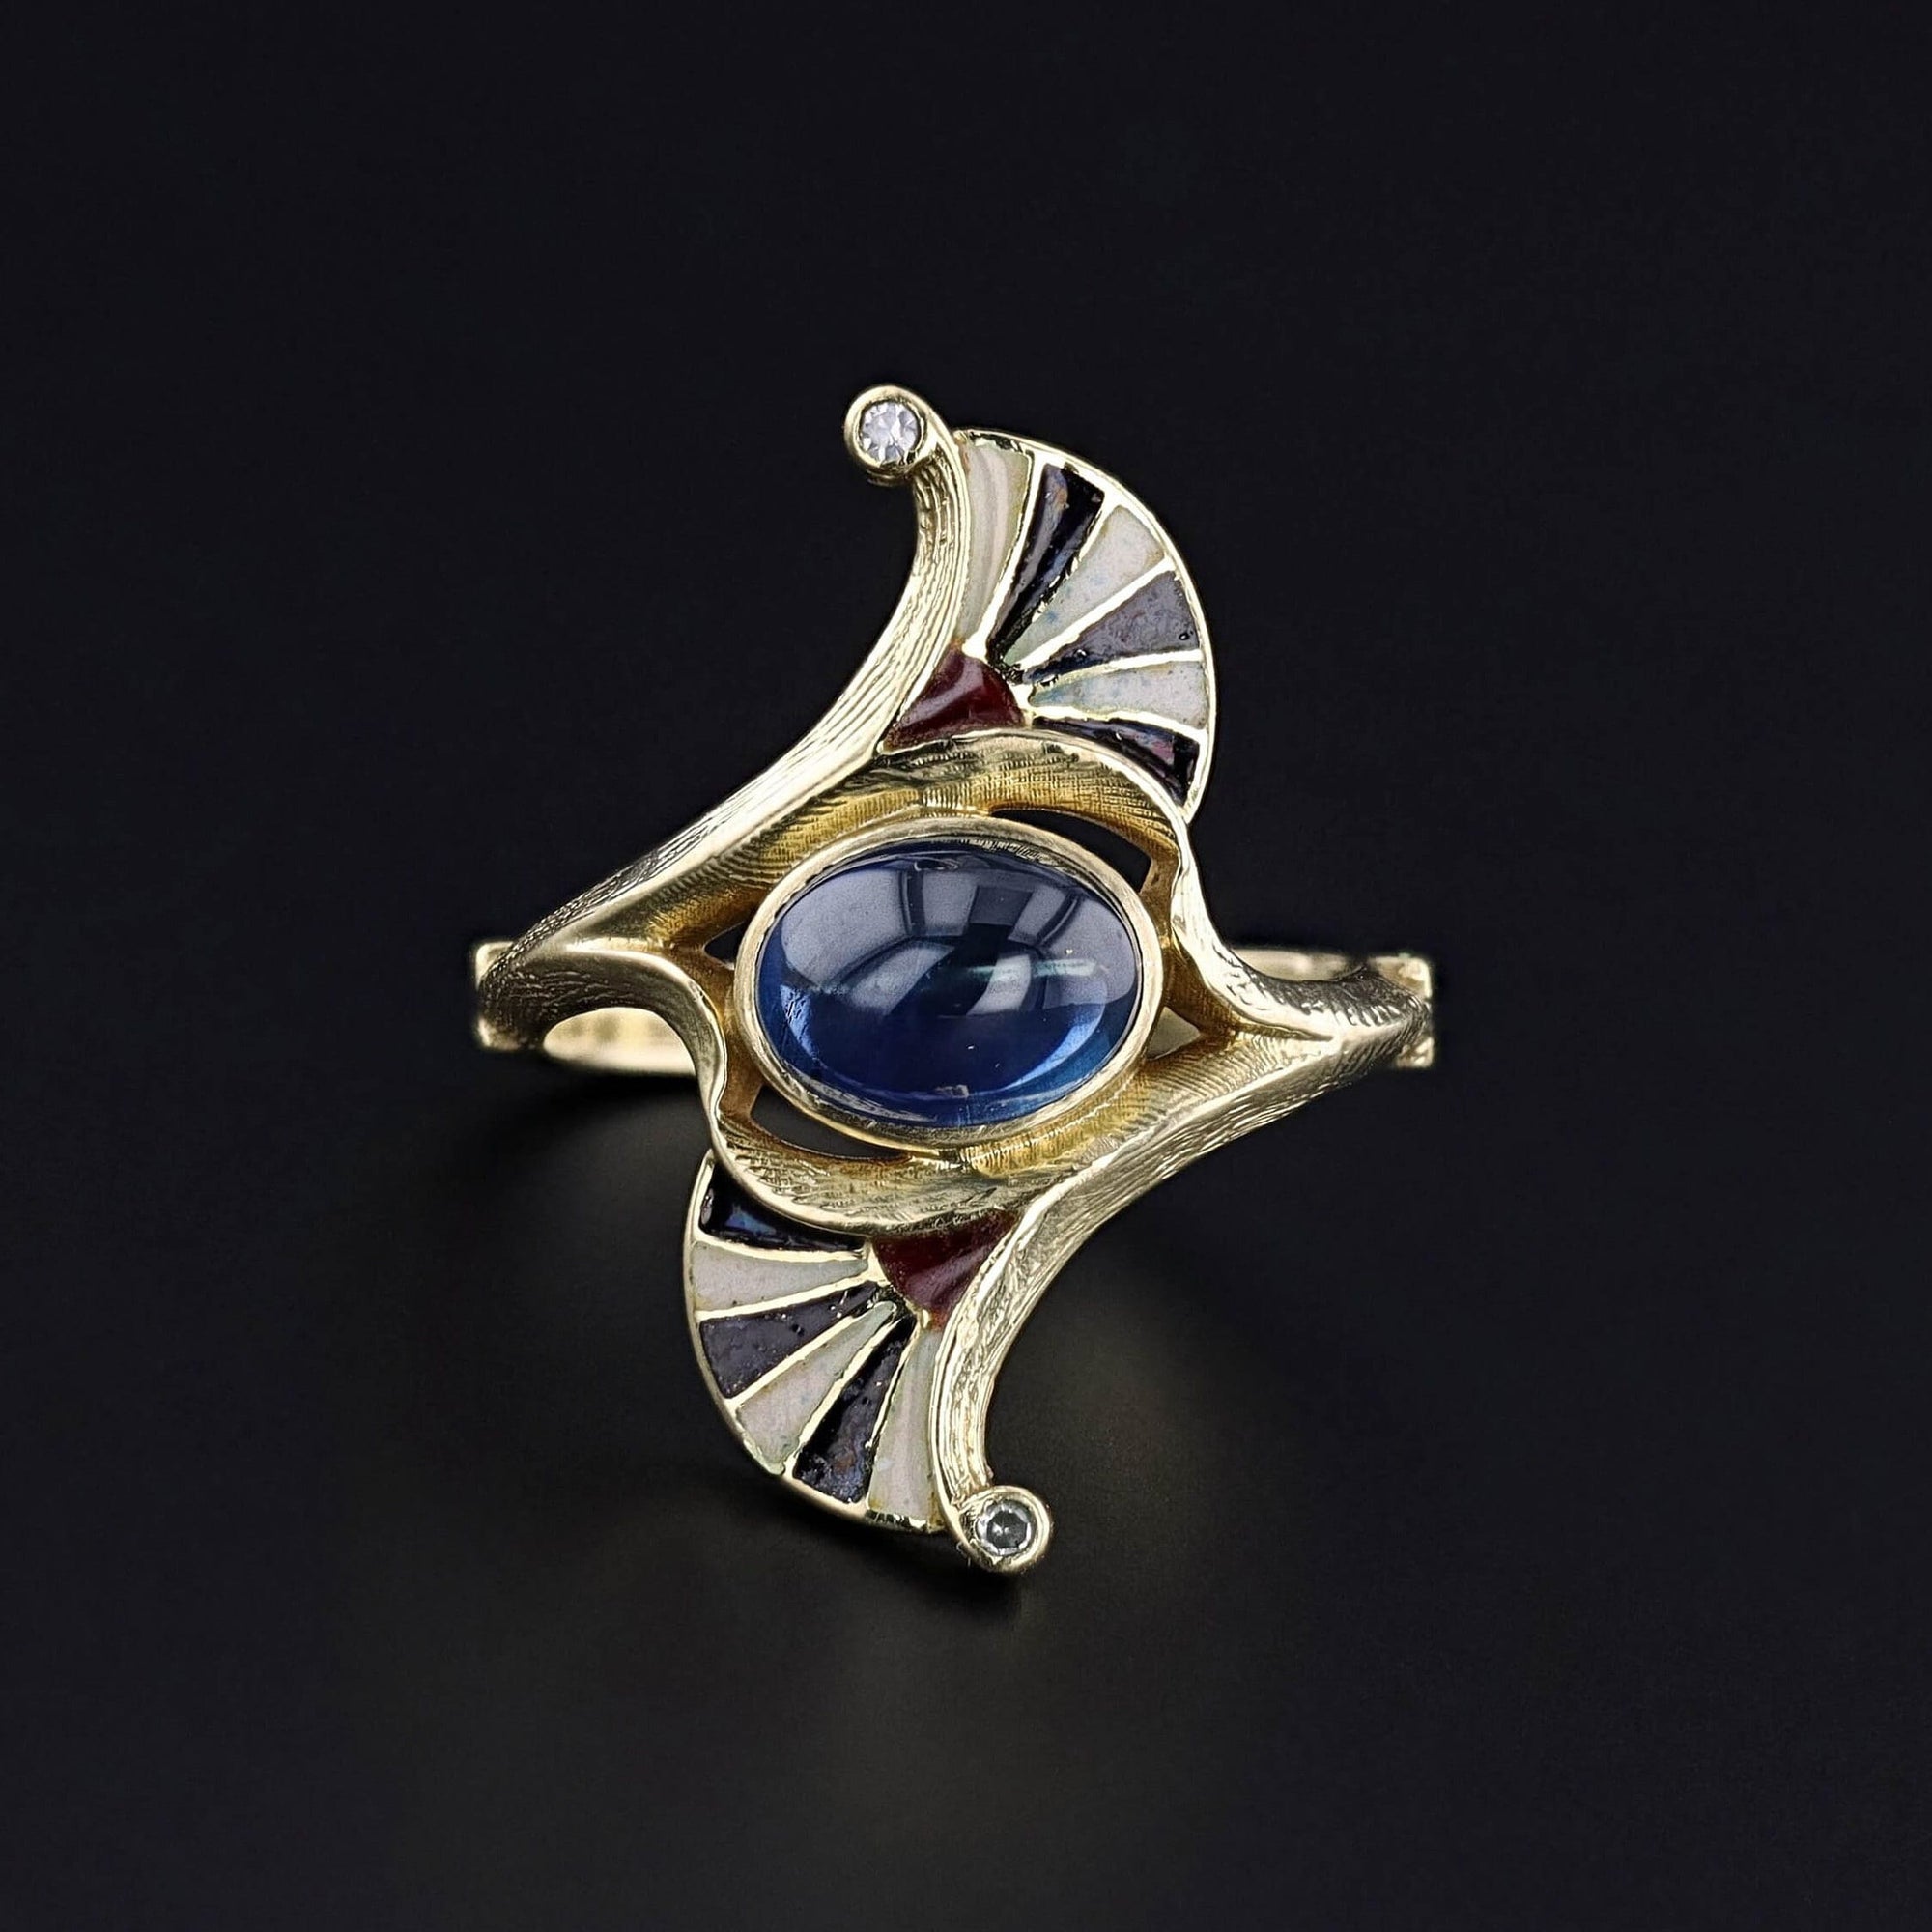 Antique Sapphire & Enamel Ring of 18k Gold